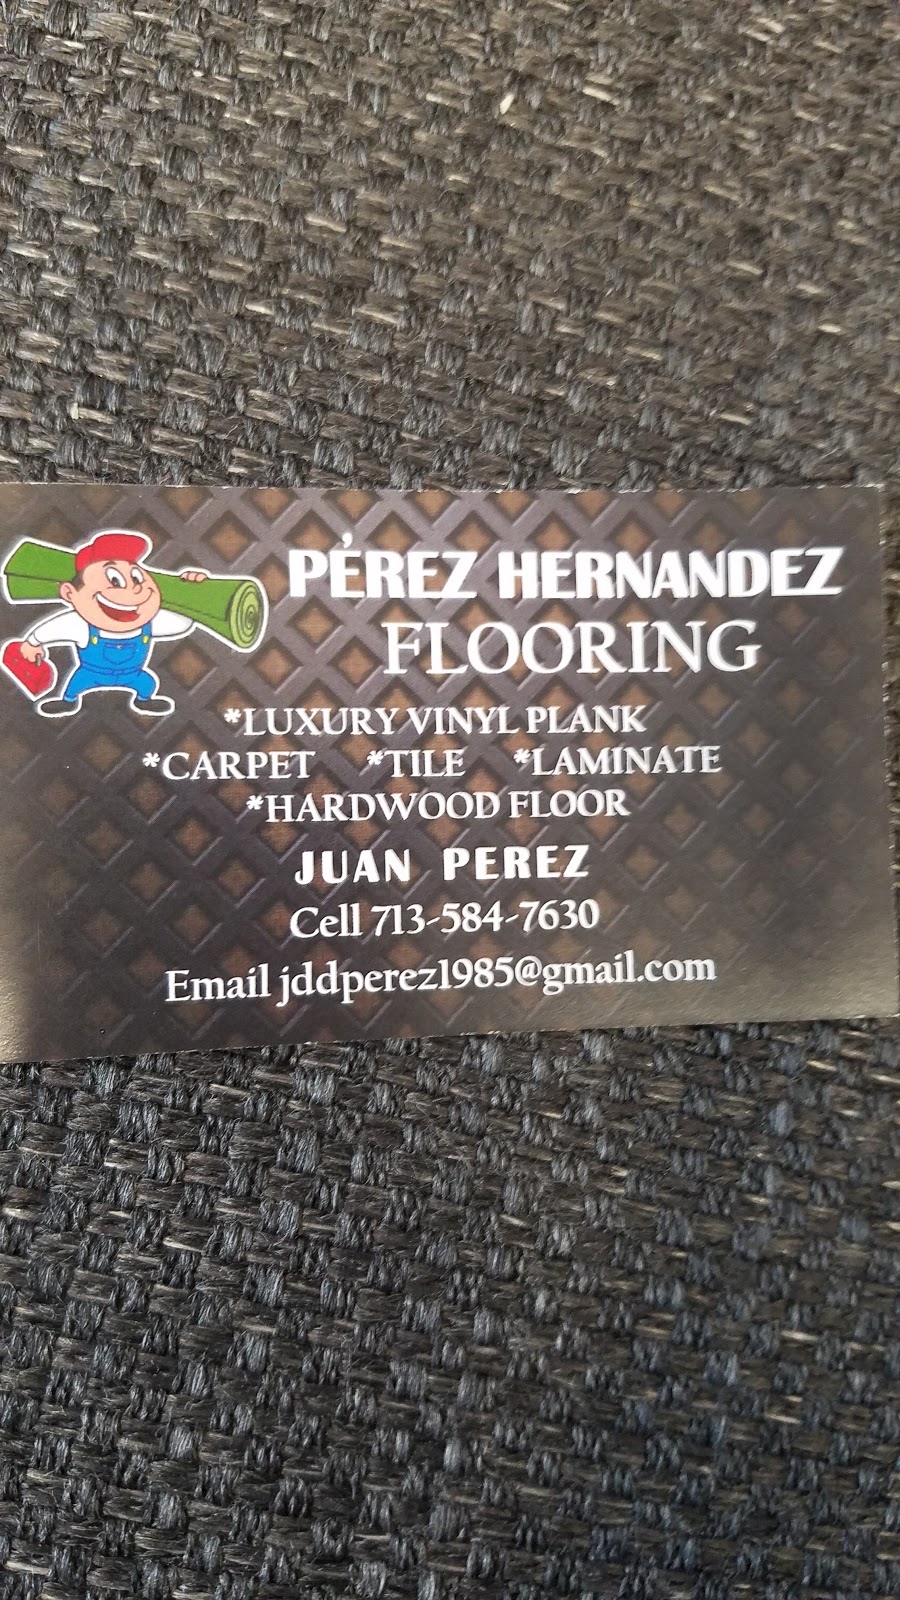 Perezhernandez flooring | 671 ROAD 5702, Cleveland, TX 77327 | Phone: (713) 584-7630